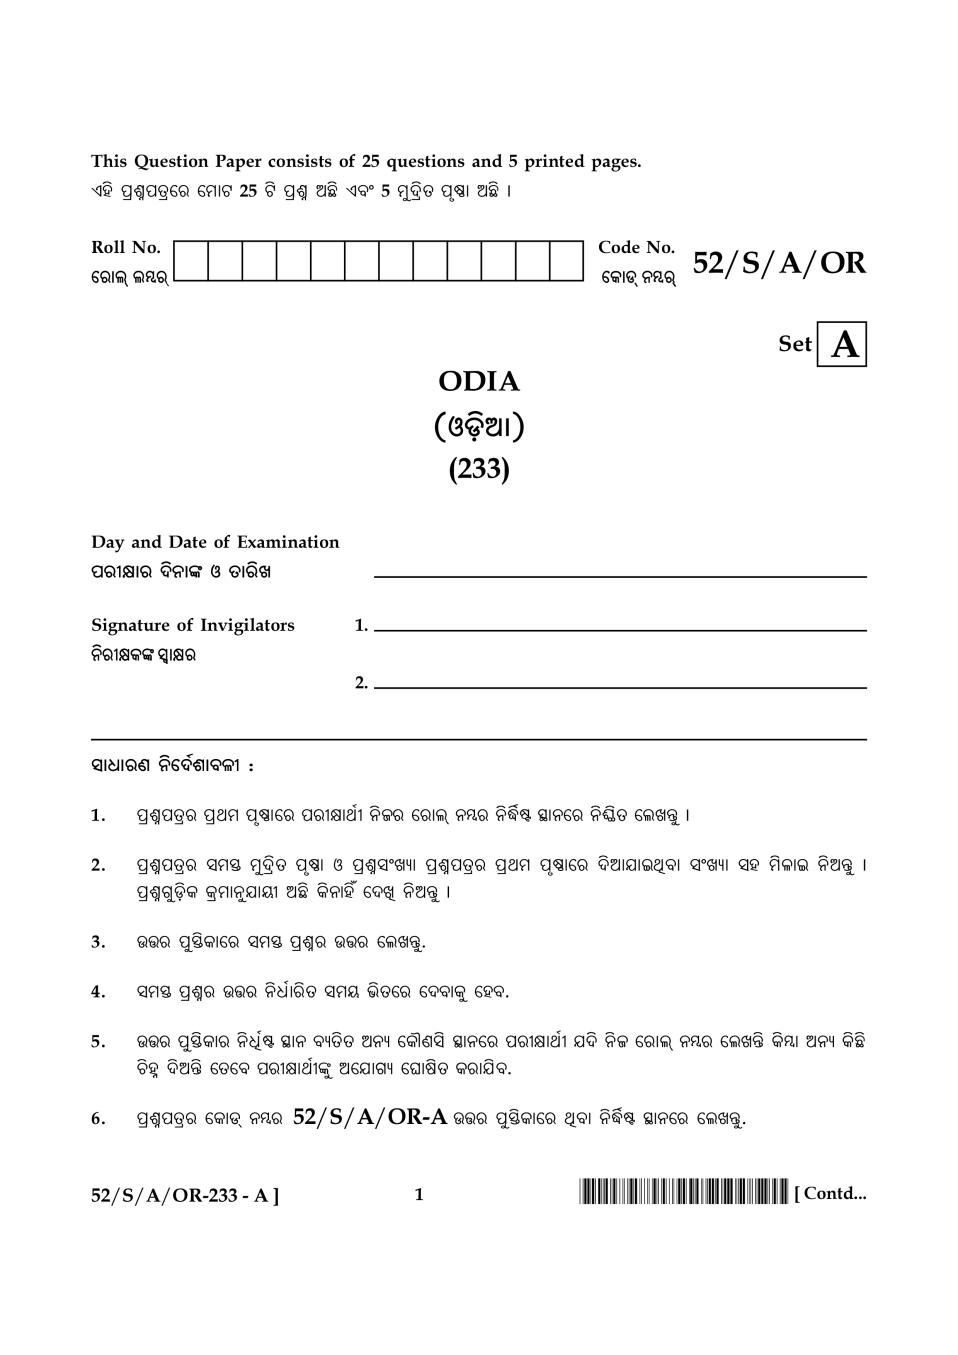 NIOS Class 10 Question Paper Apr 2016 - Odia - Page 1